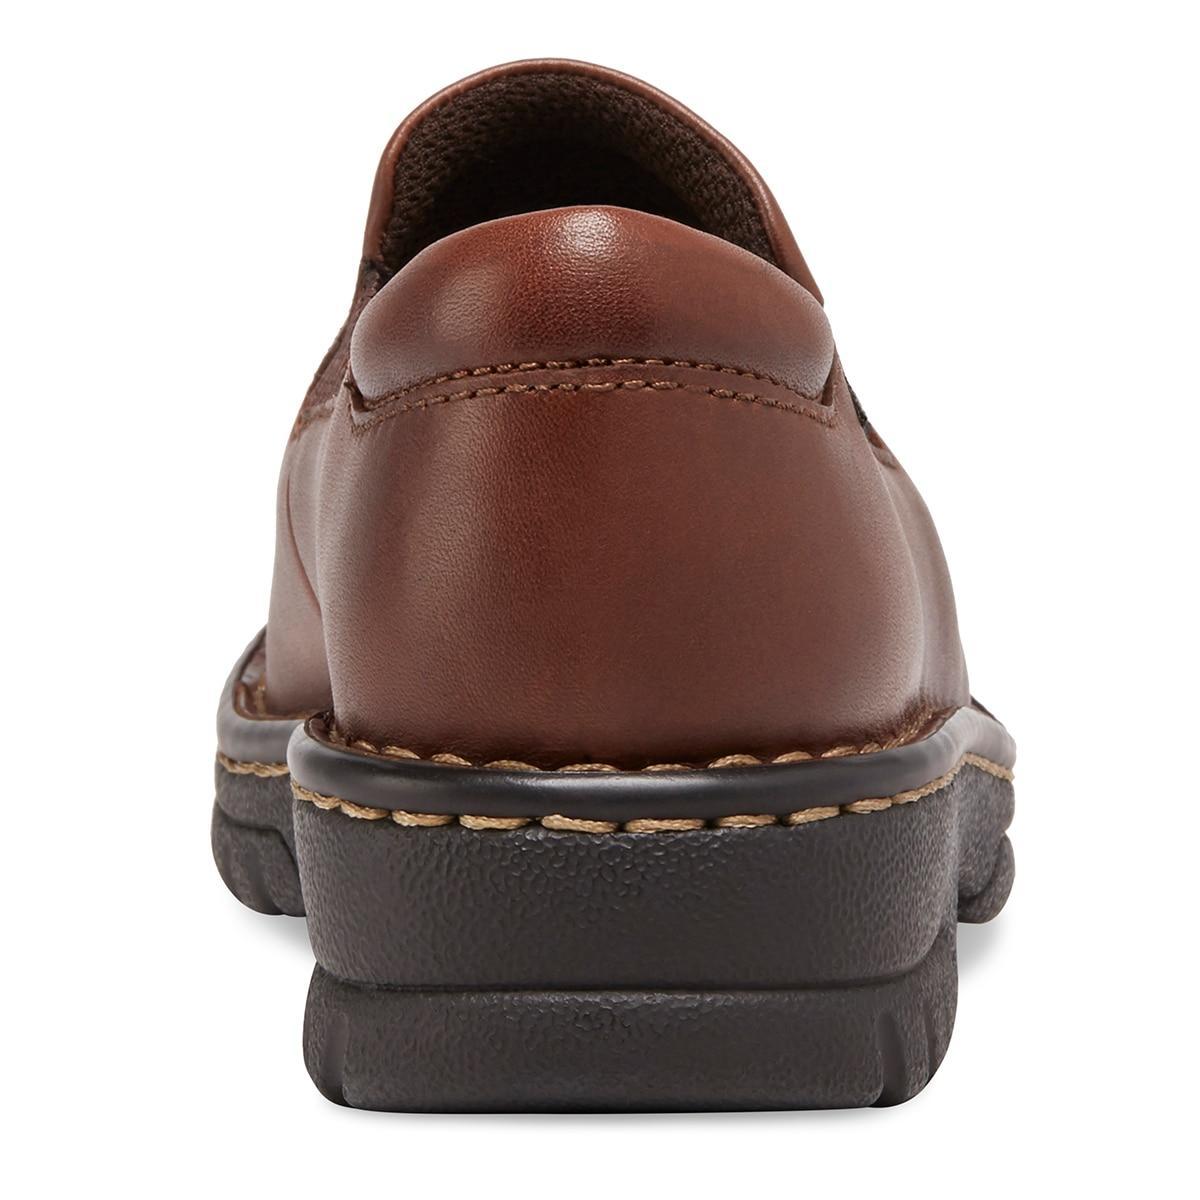 Eastland Newport Womens Slip-On Shoes Black Product Image